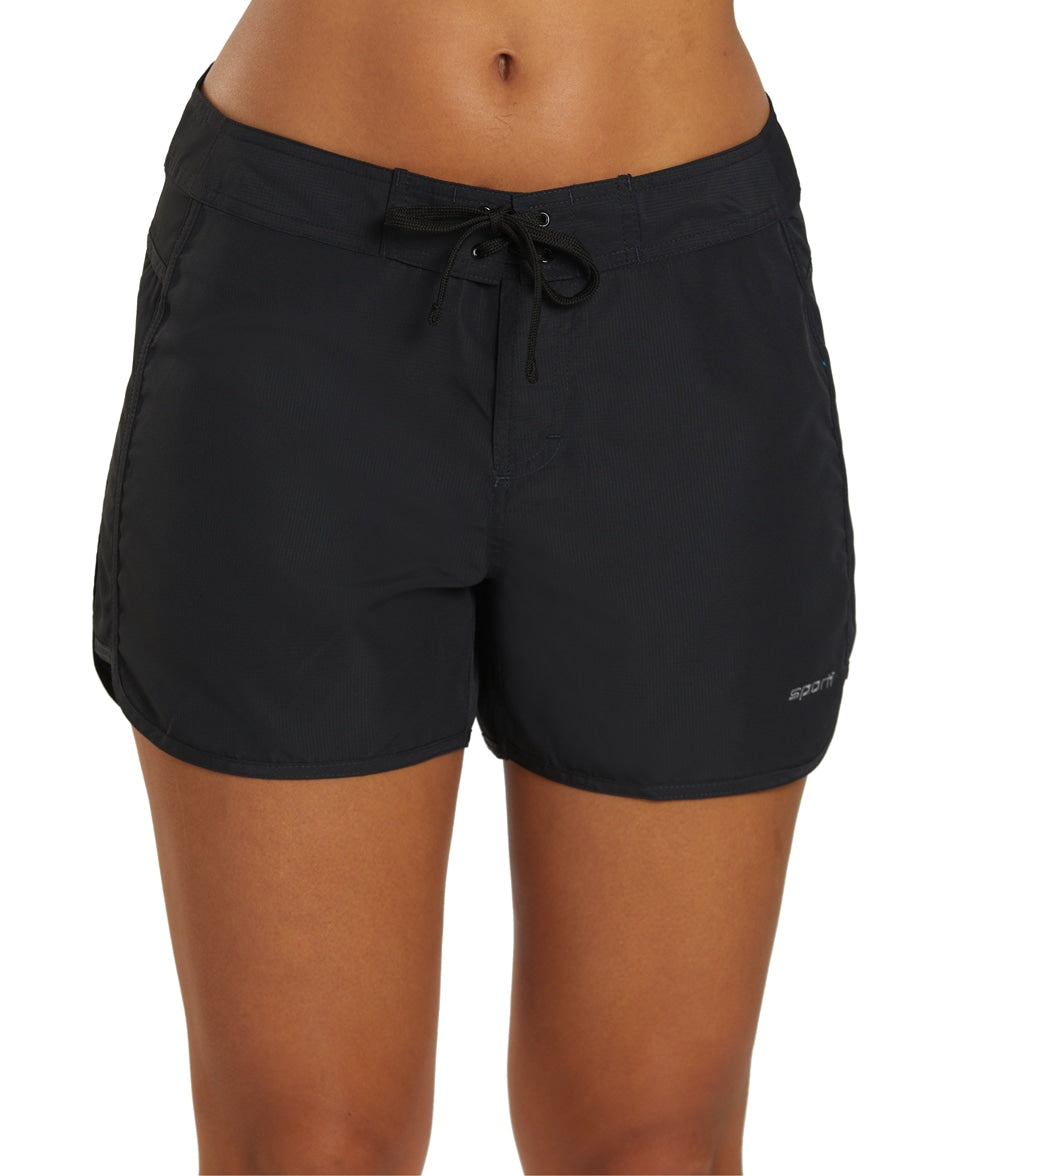  Womens Swim Shorts High Waist Swimsuit Bottoms Tummy Control Bathing  Suit Boy Shorts Board Shorts Black